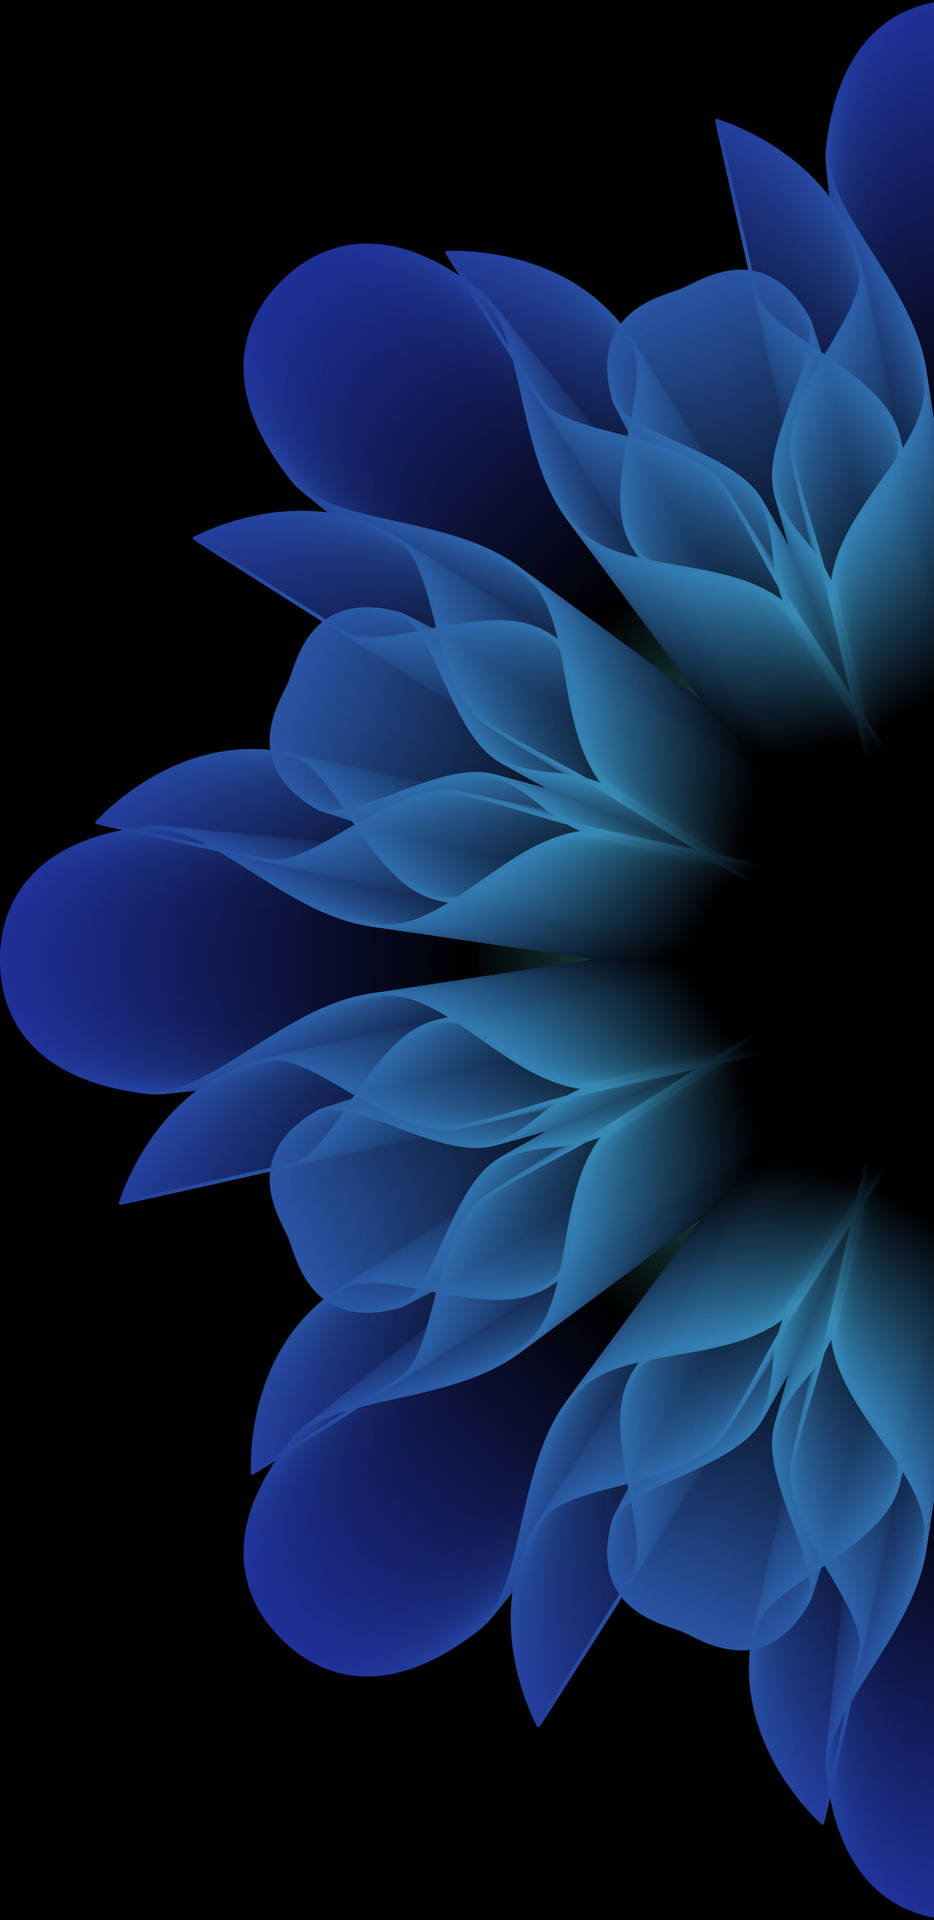 Blue Flower Mobile Digital Art Background